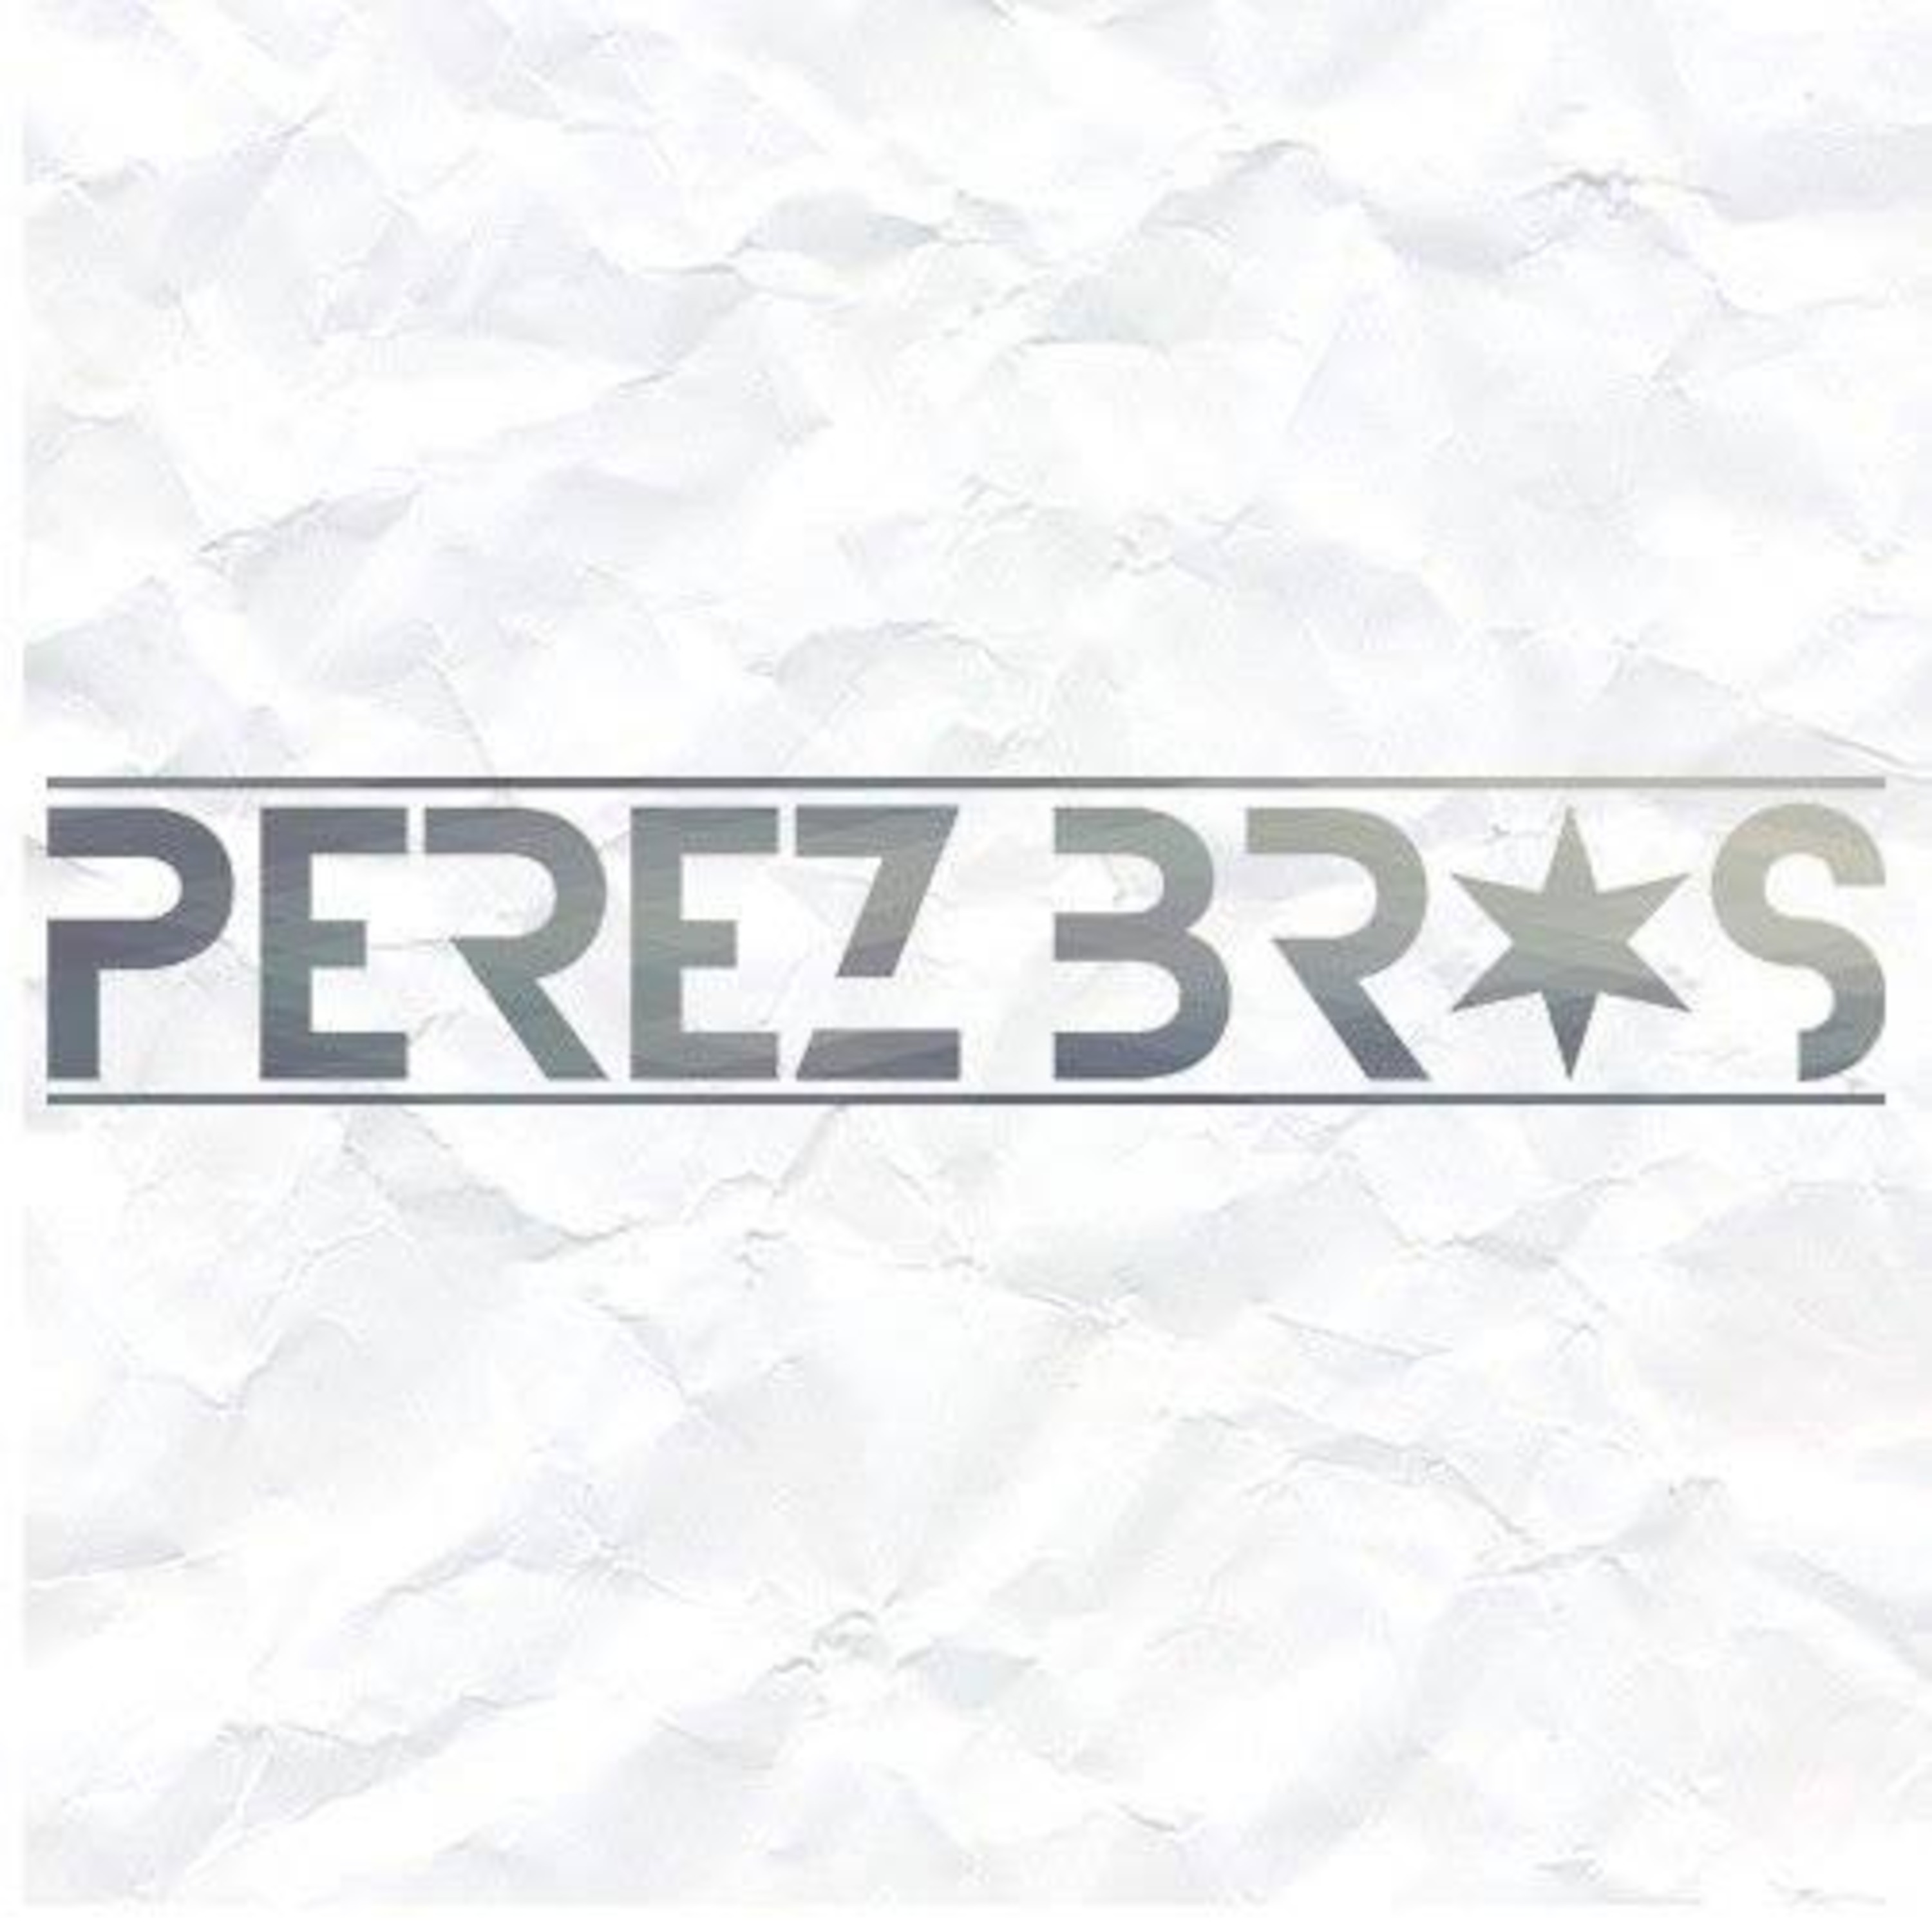 Perez Bros Music Podcast